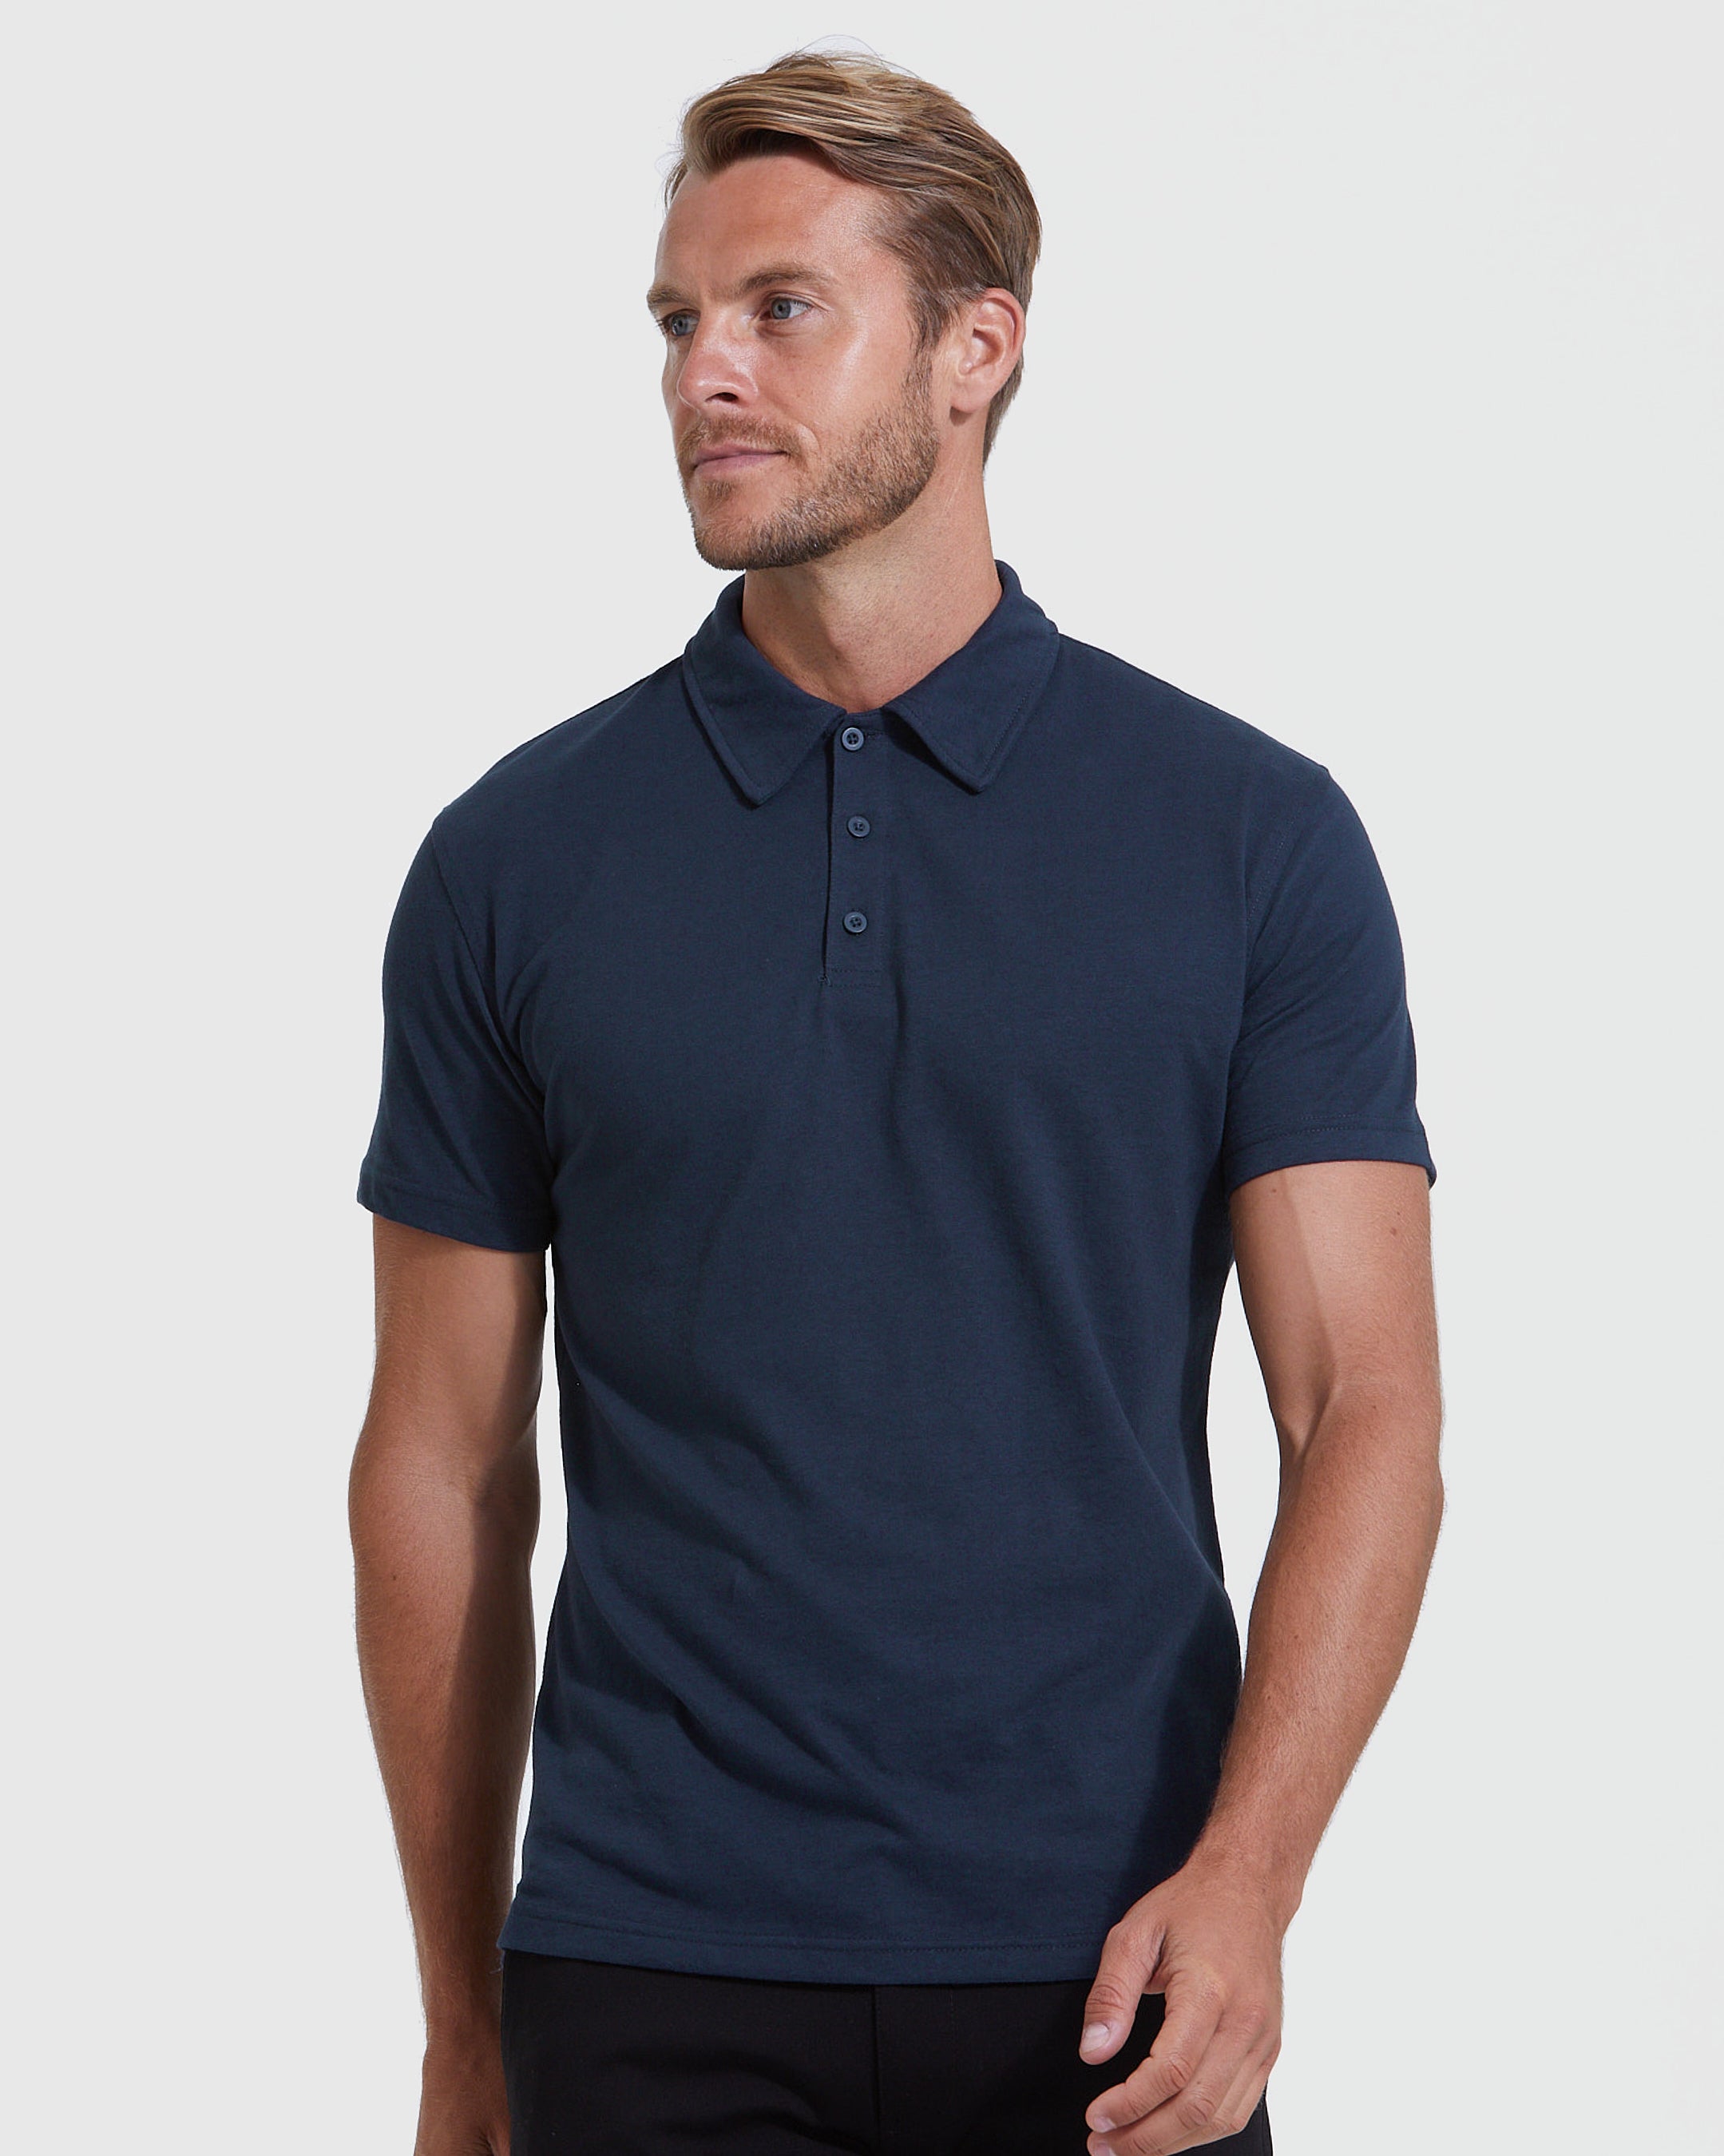 Navy Blue Polo | Men's Navy Blue Polo Shirts | True Classic